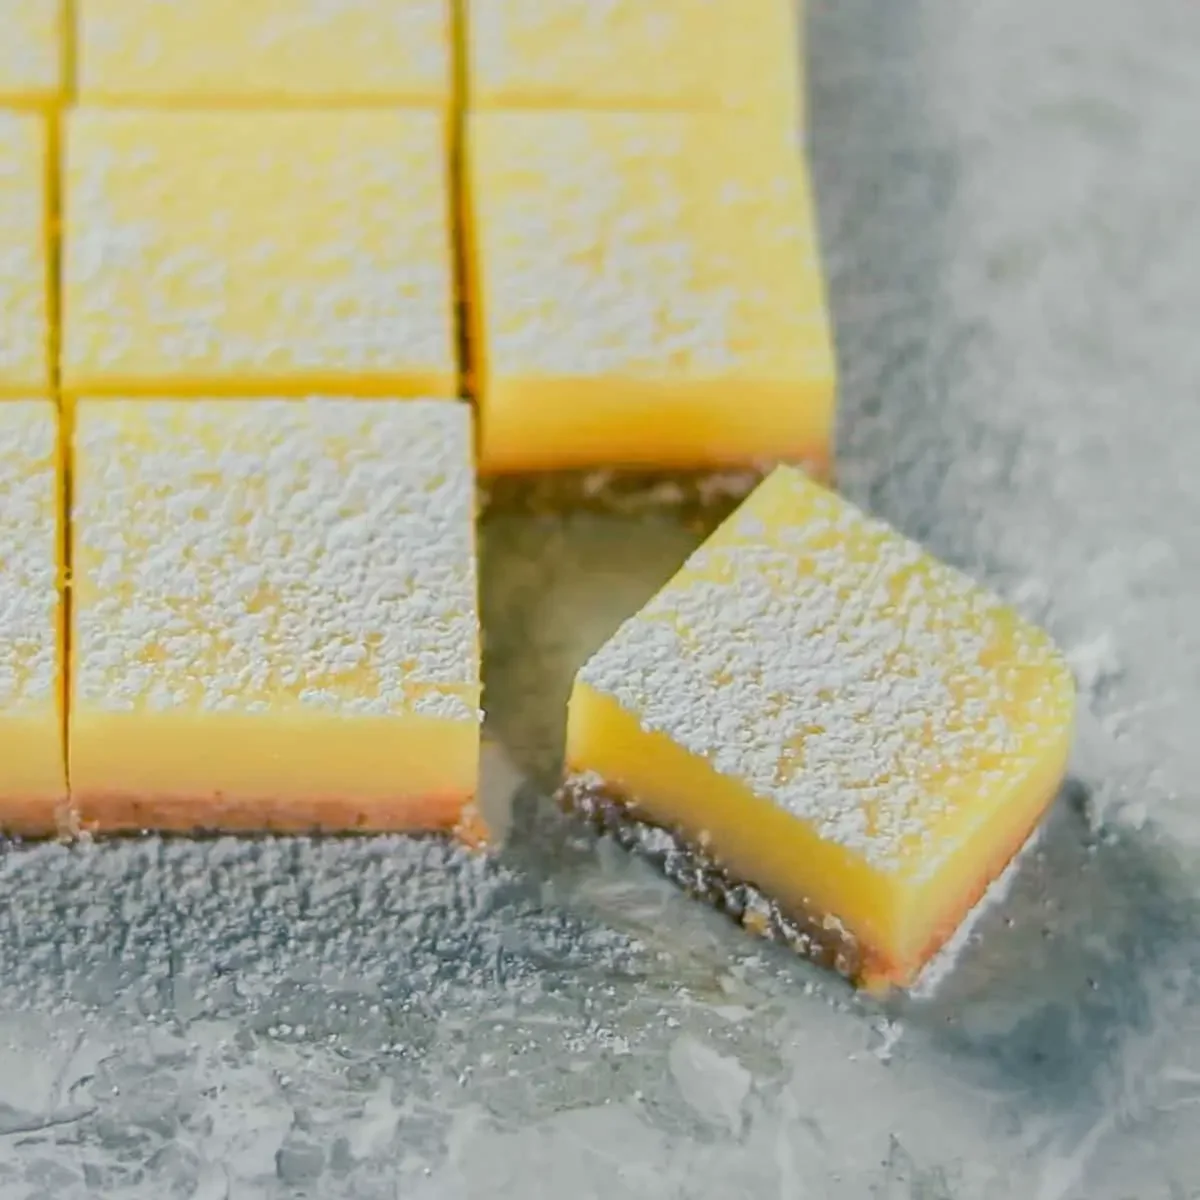 【No Oven】 Easy Lemon Squares Recipe